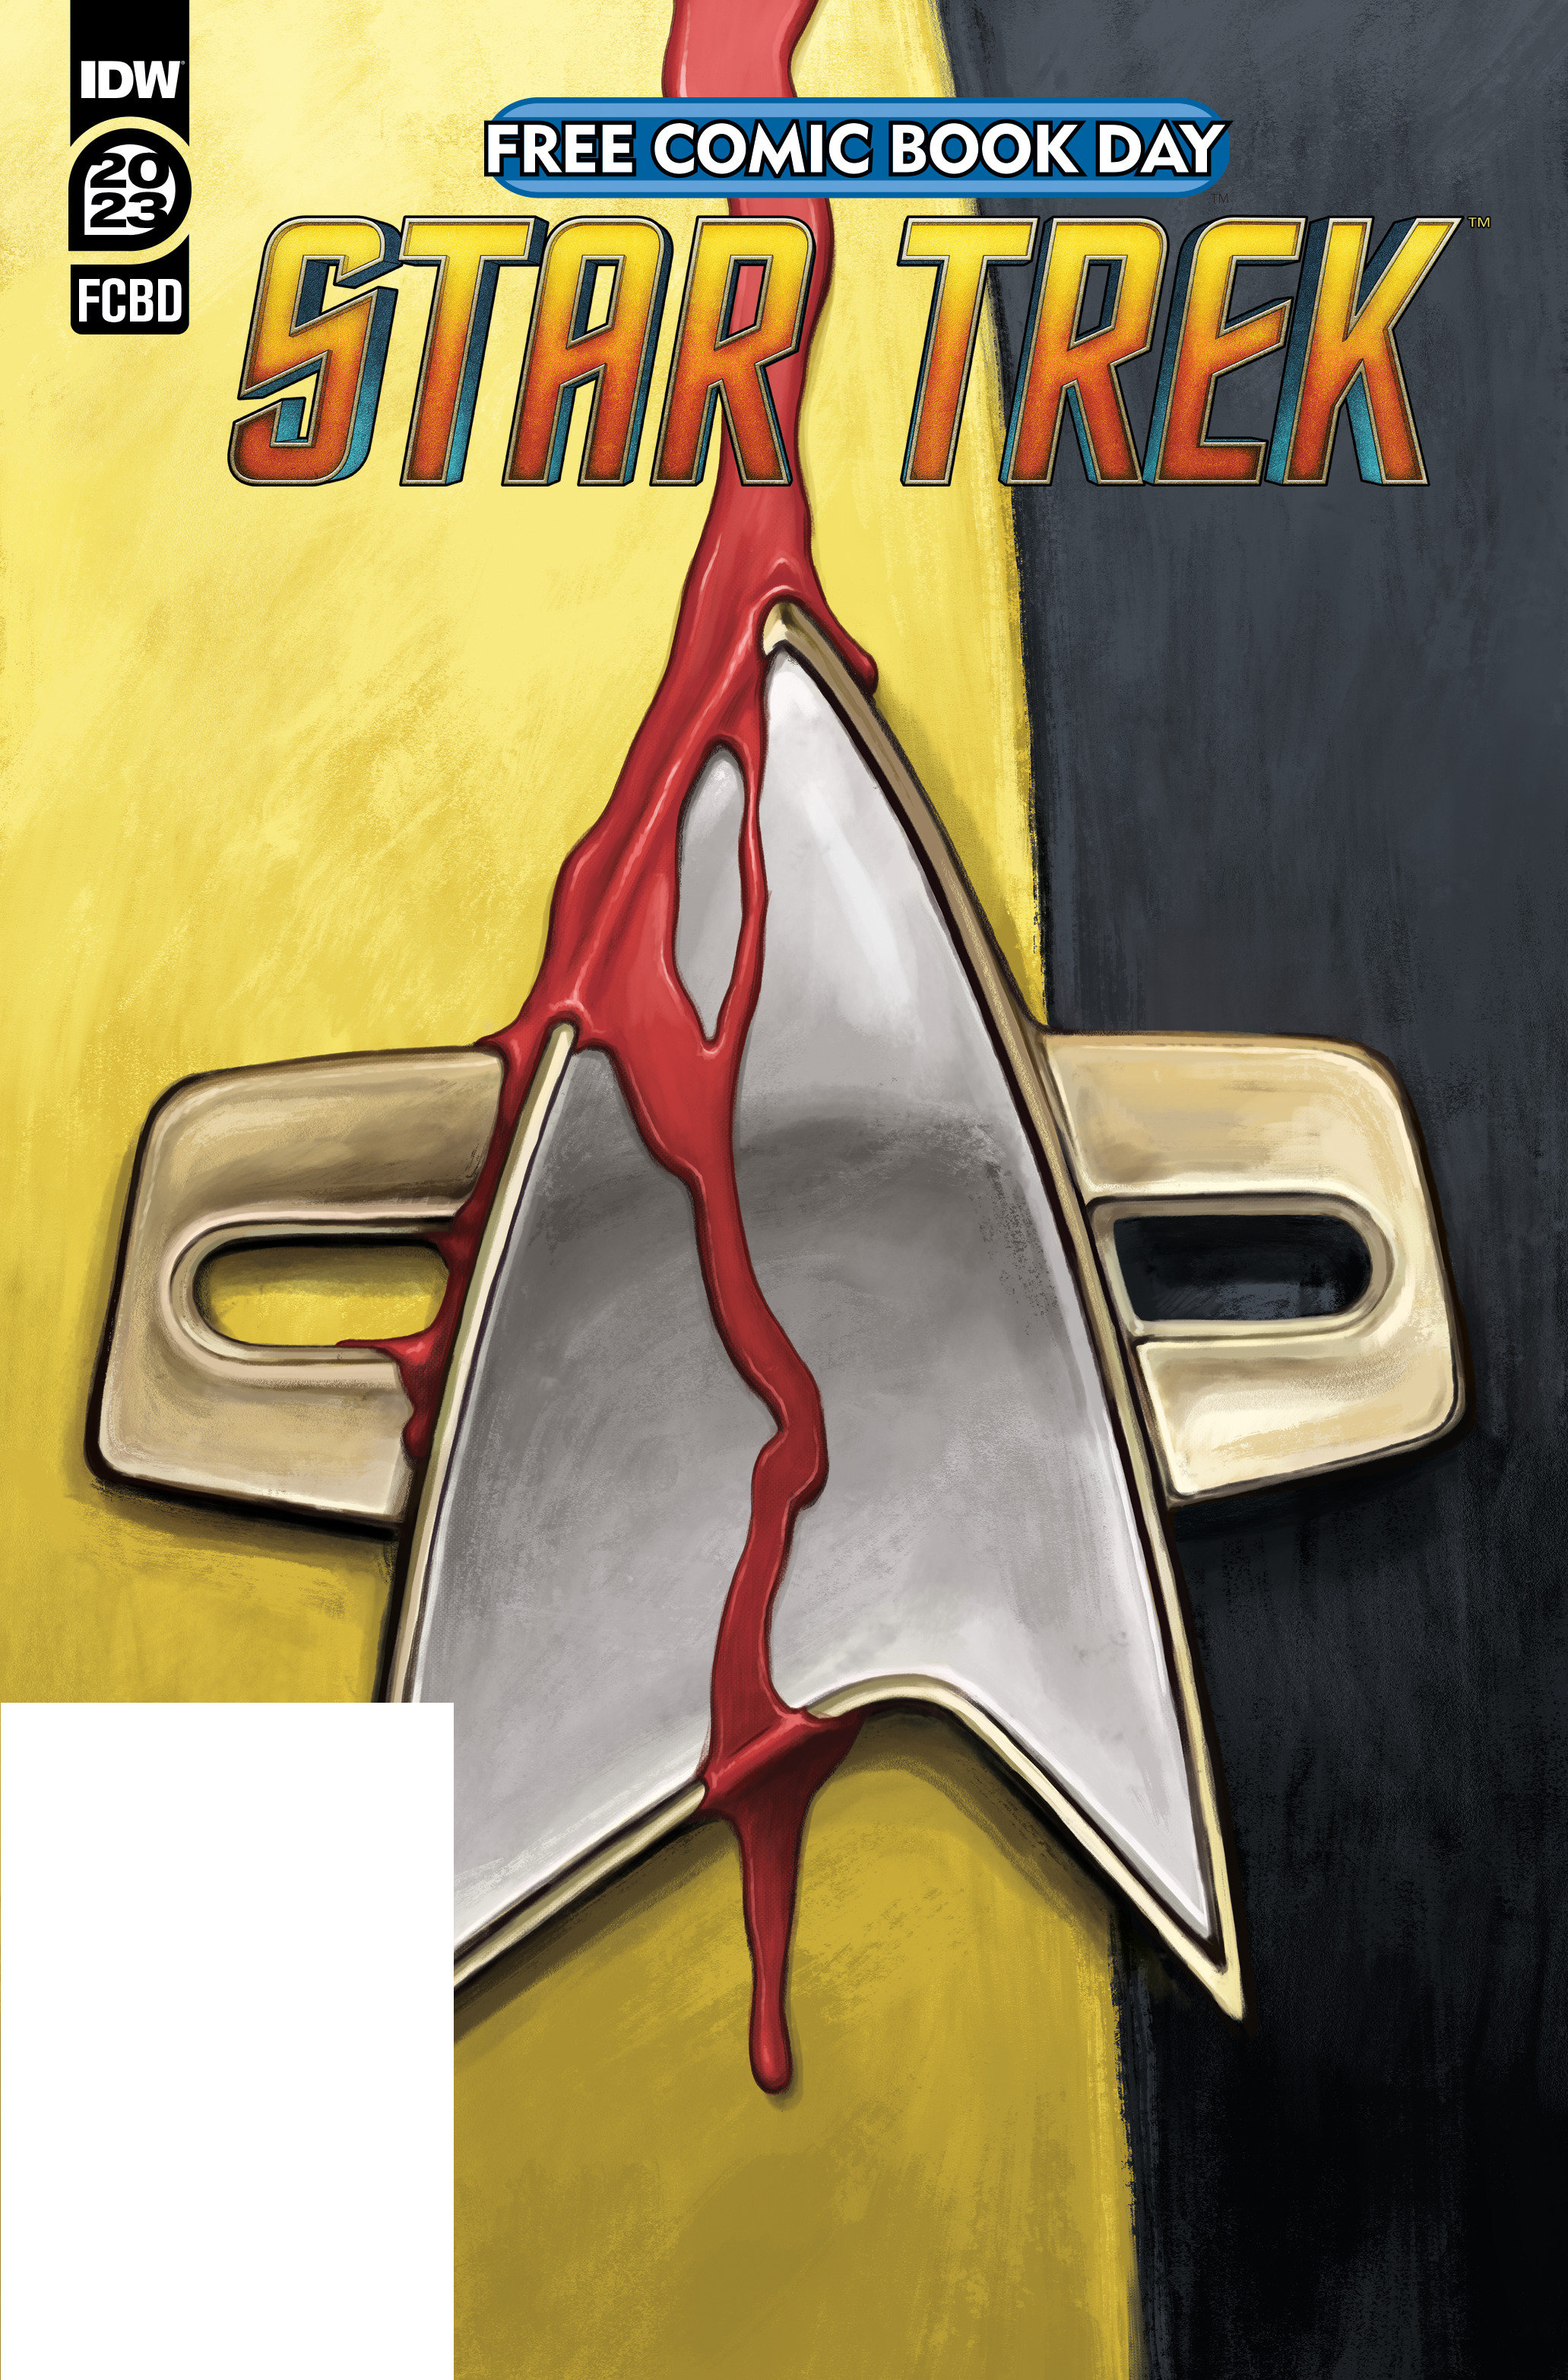 FCBD 2023 Star Trek